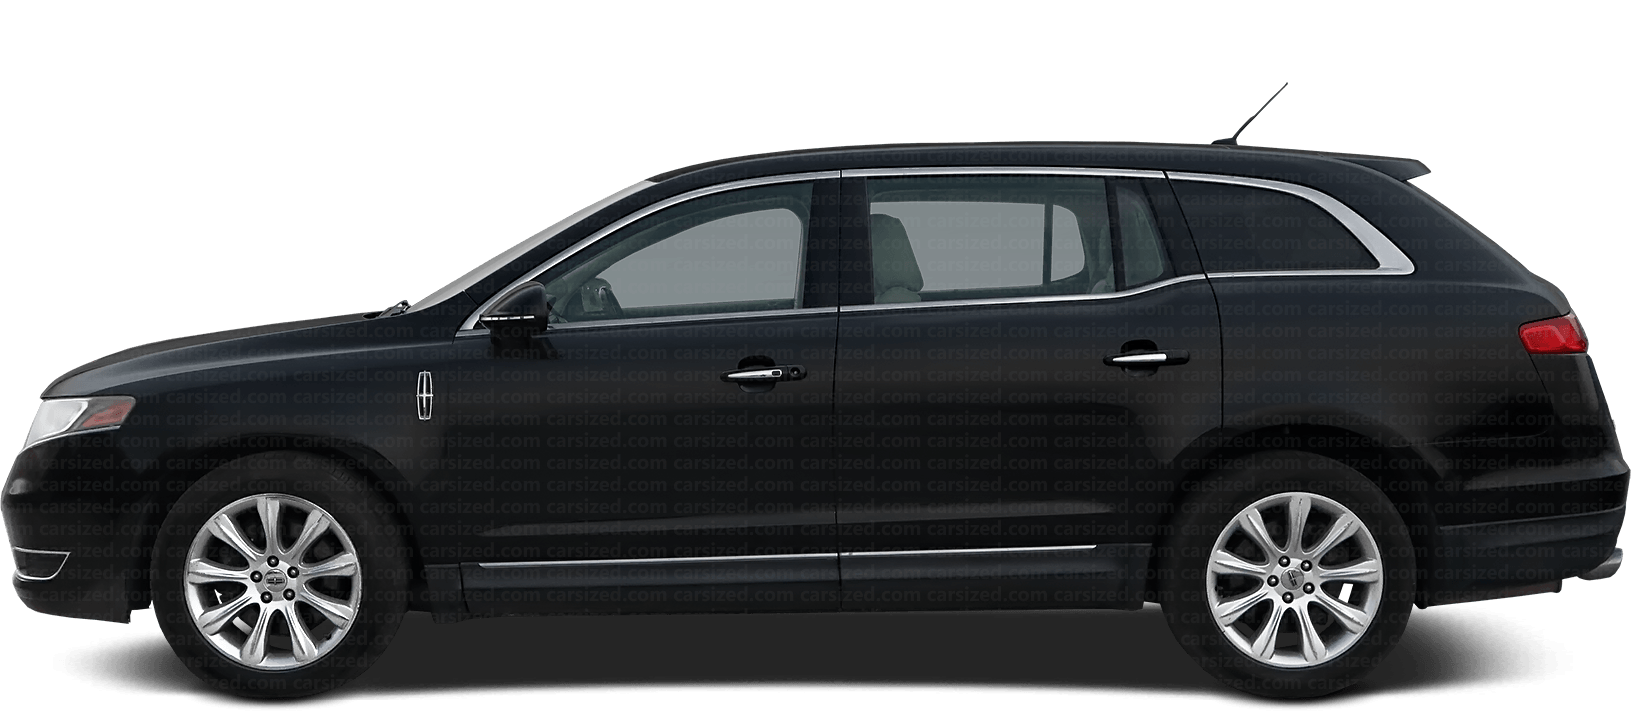 Lincoln MKT exterior - Side Profile